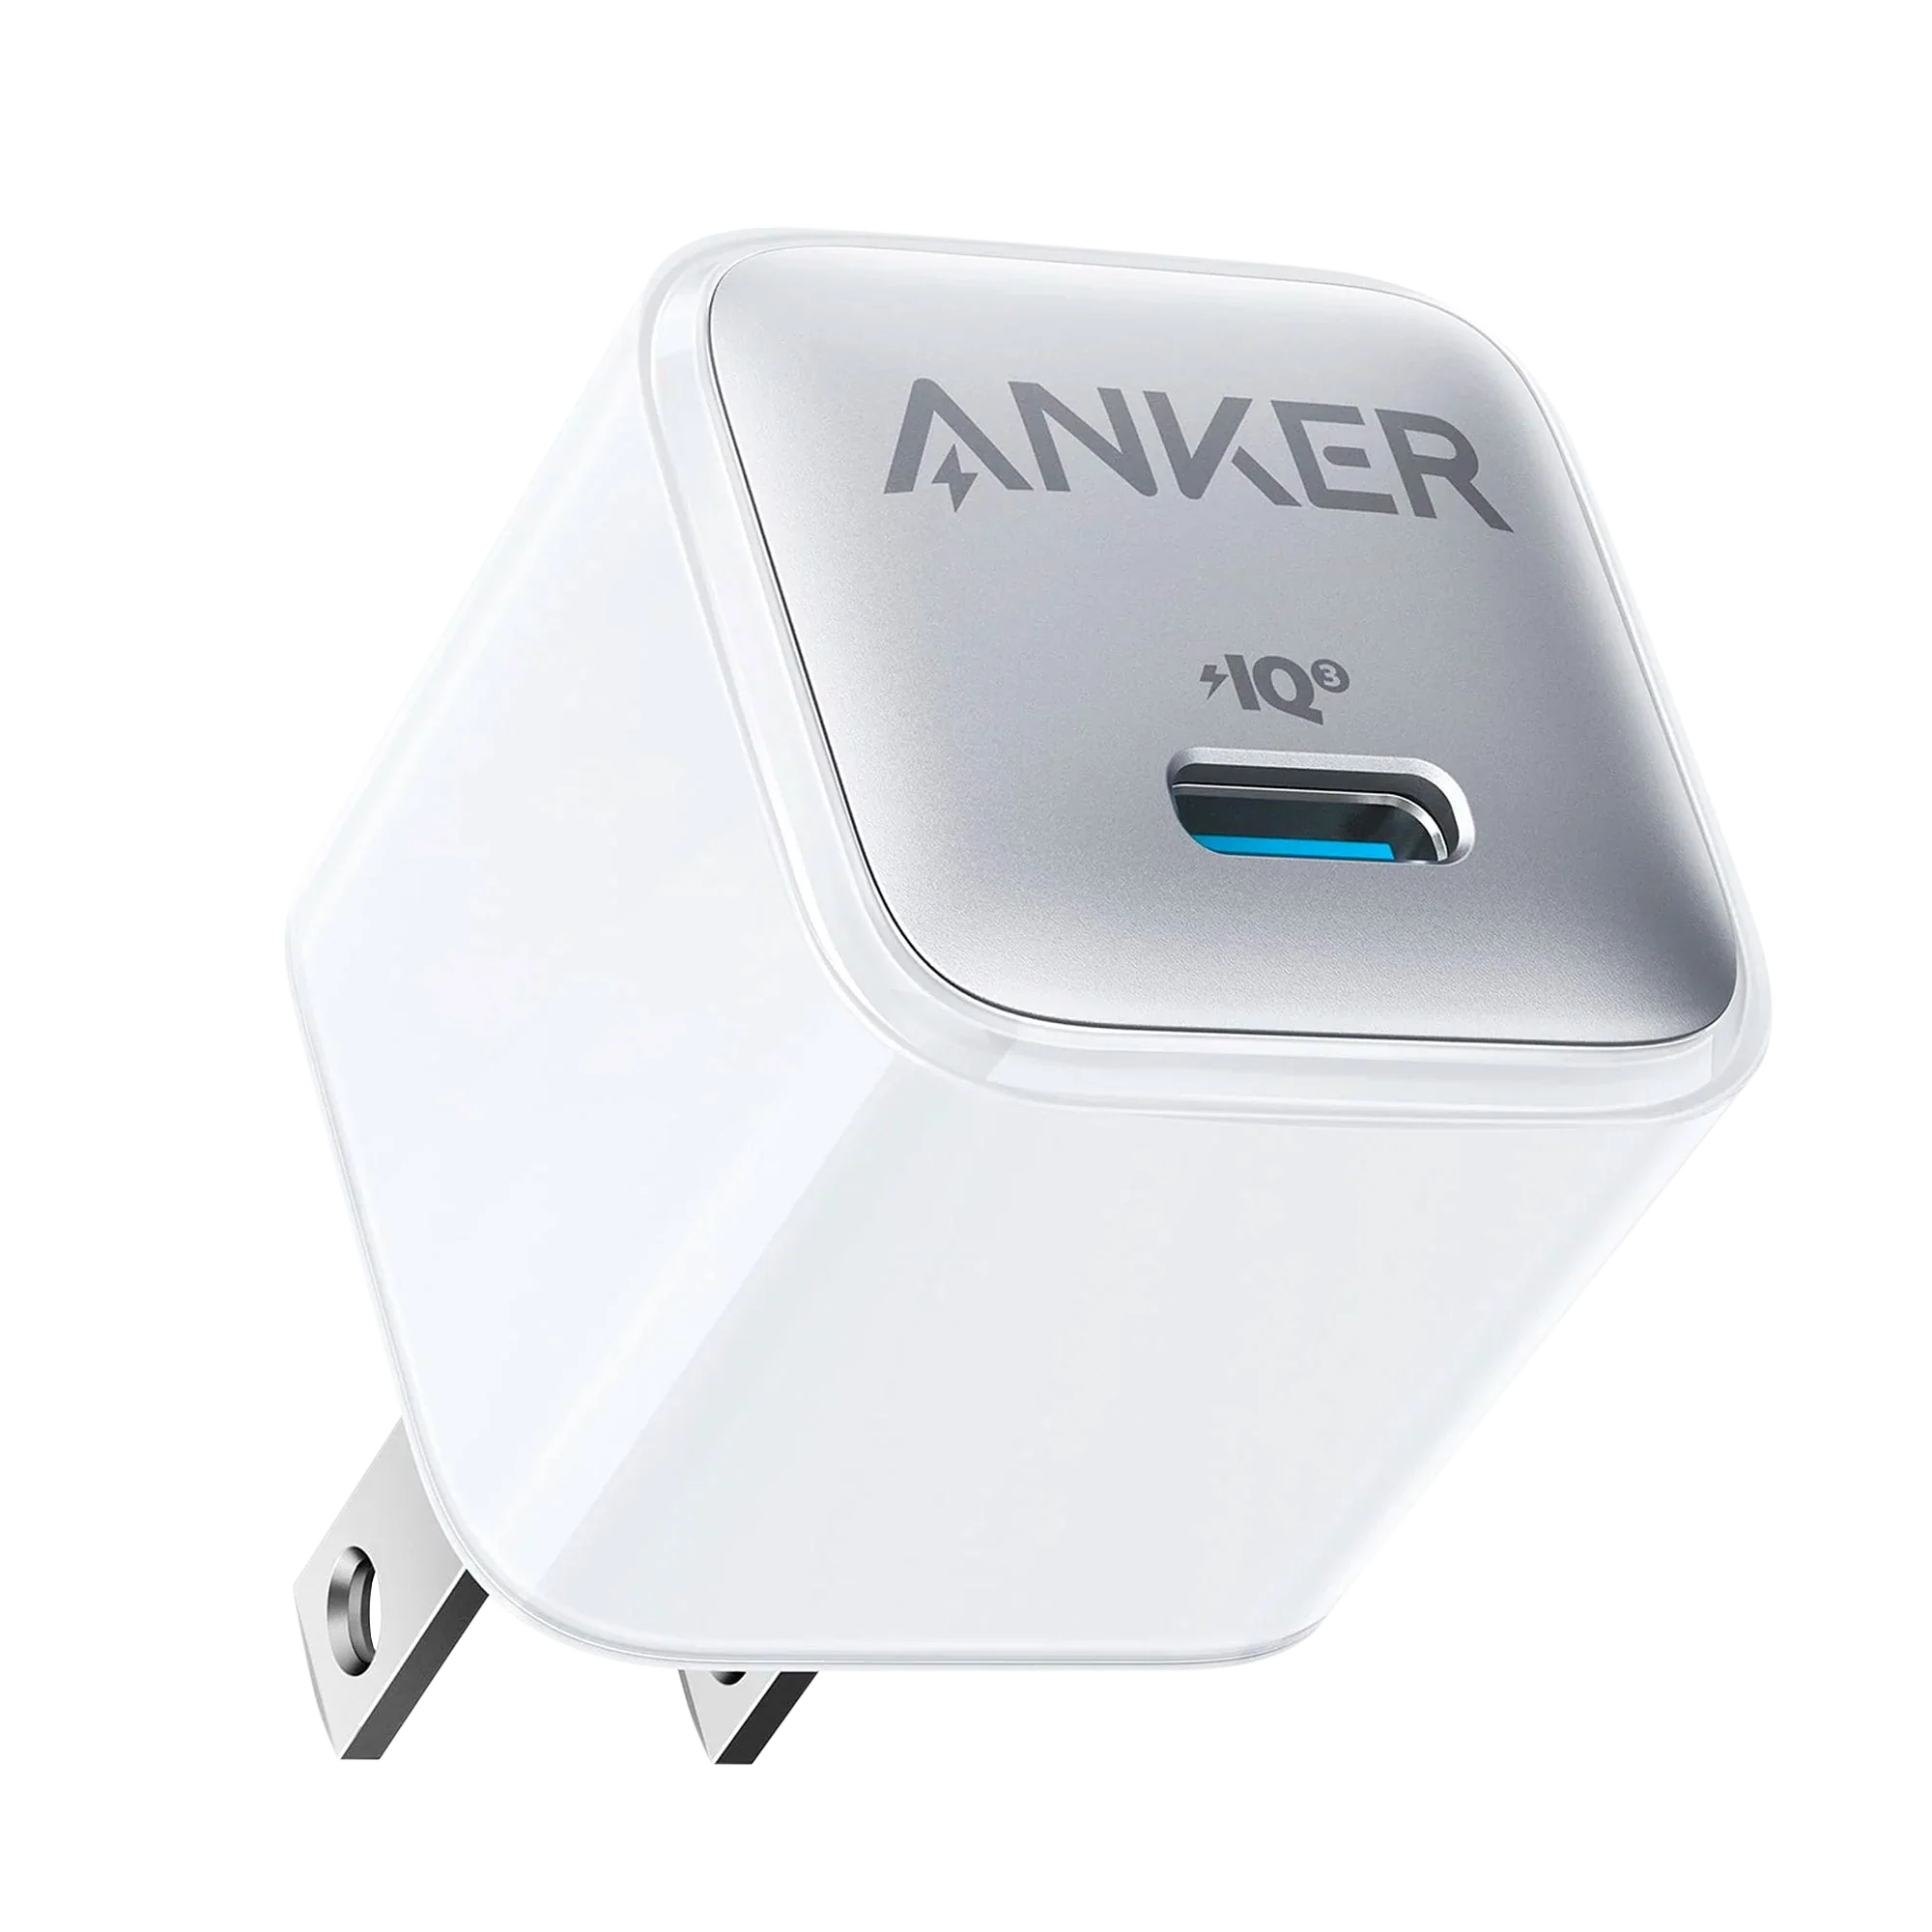 Anker <b>511</b> Charger (Nano Pro)